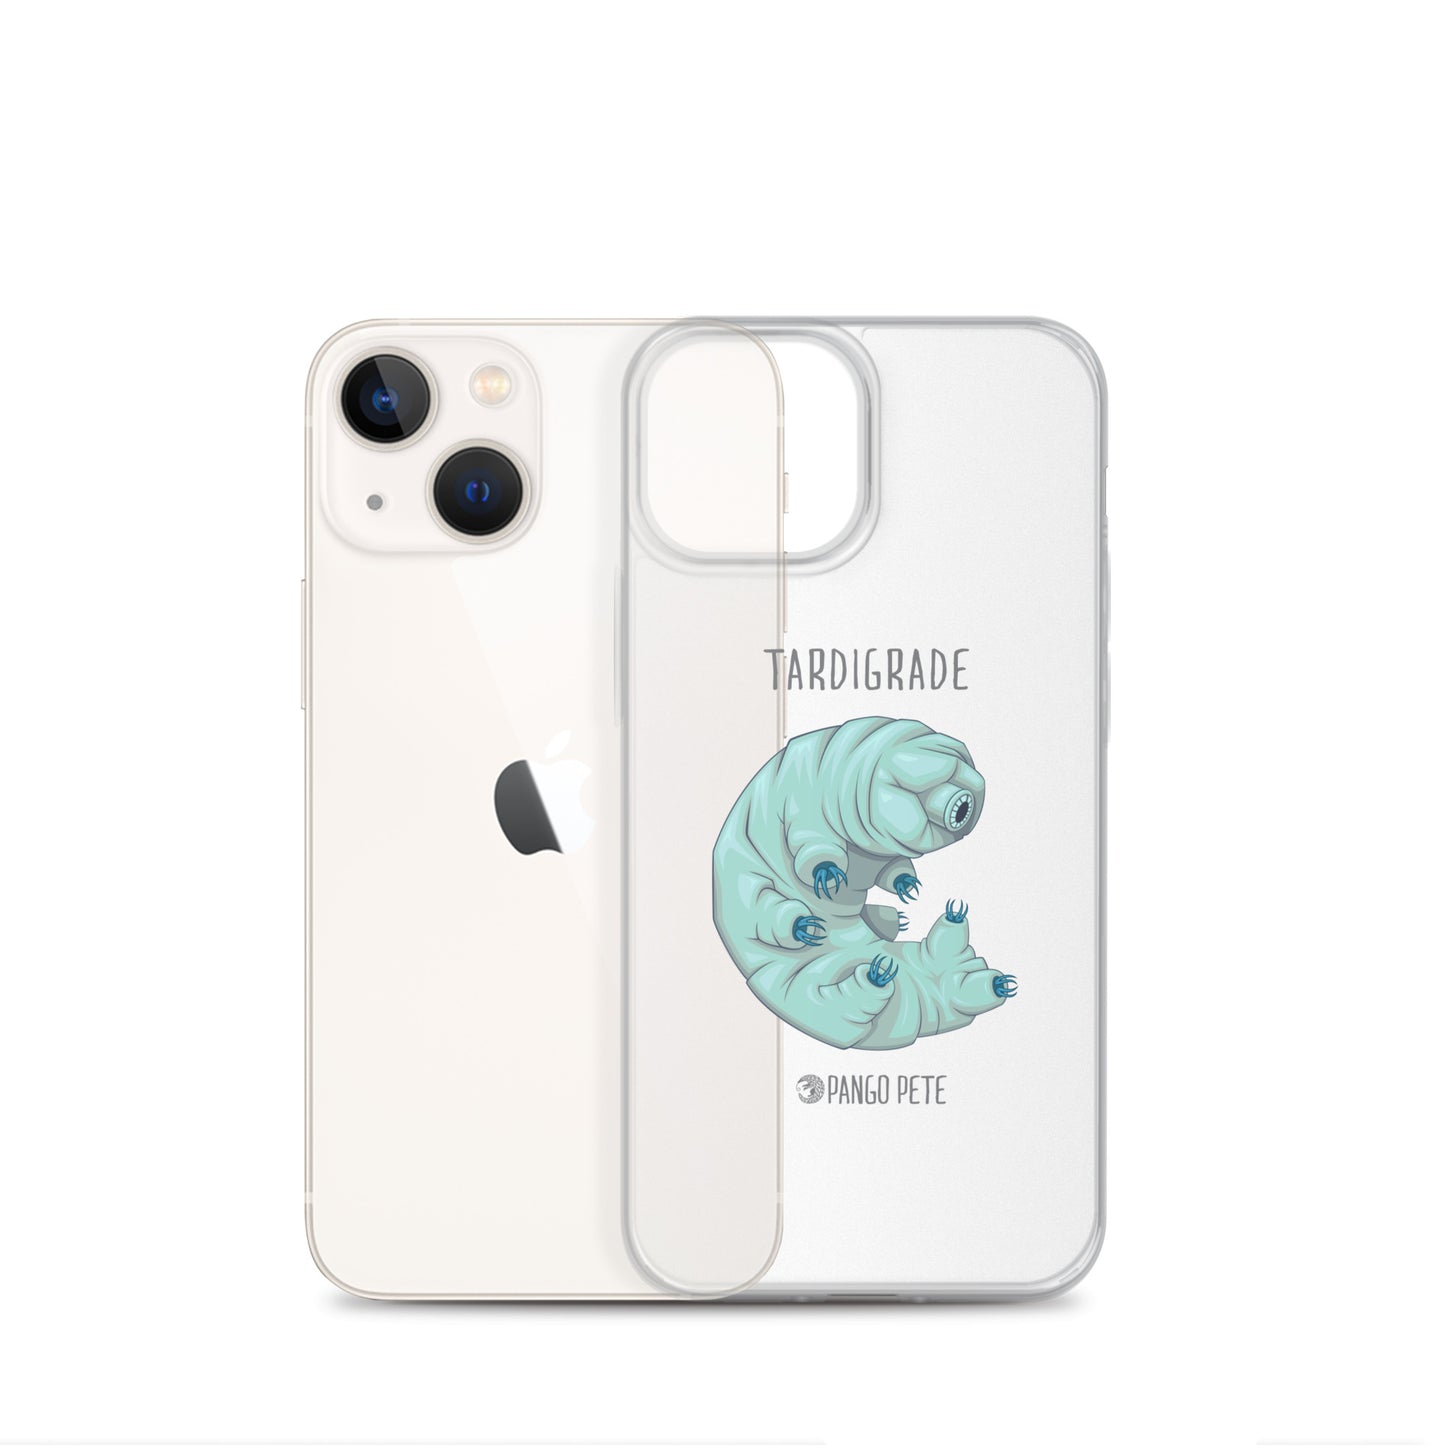 Tardigrade iPhone Case